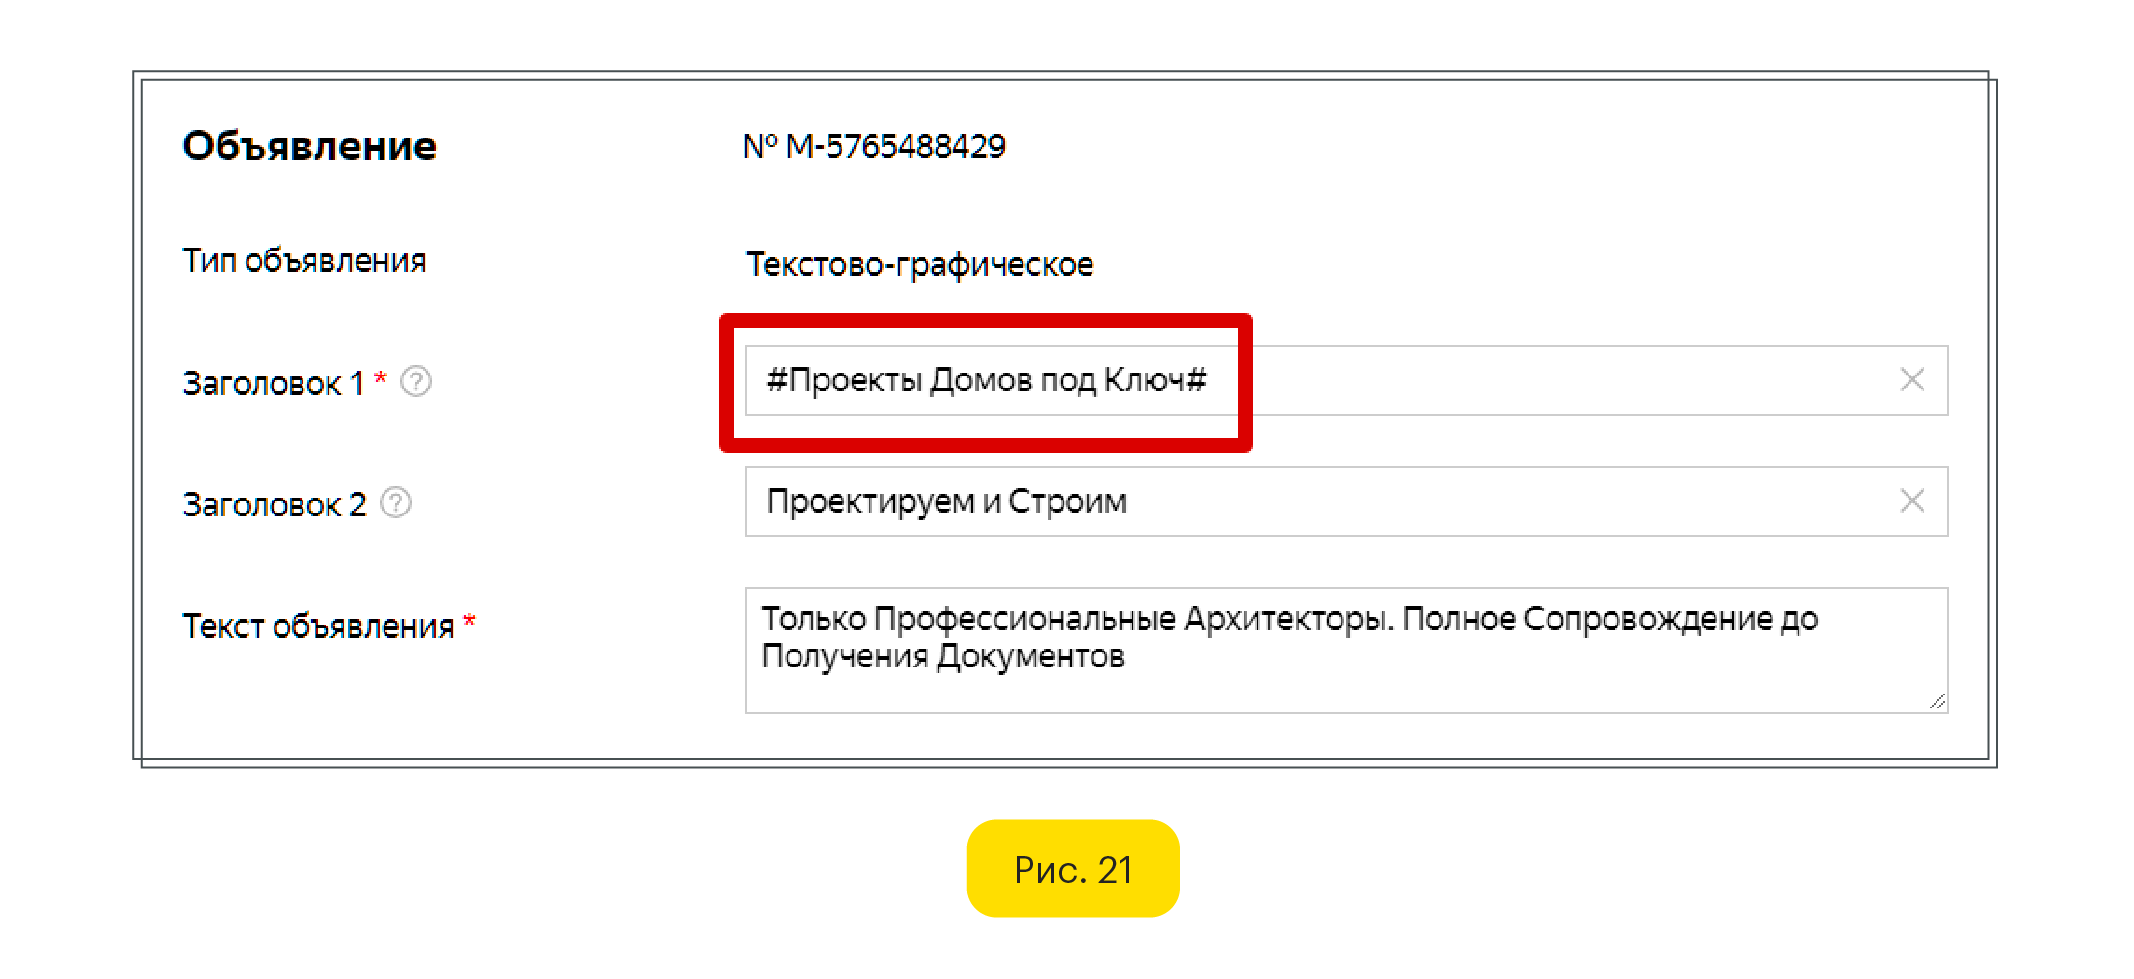 Объявление с шаблоном автоподстановки Яндекс Директ